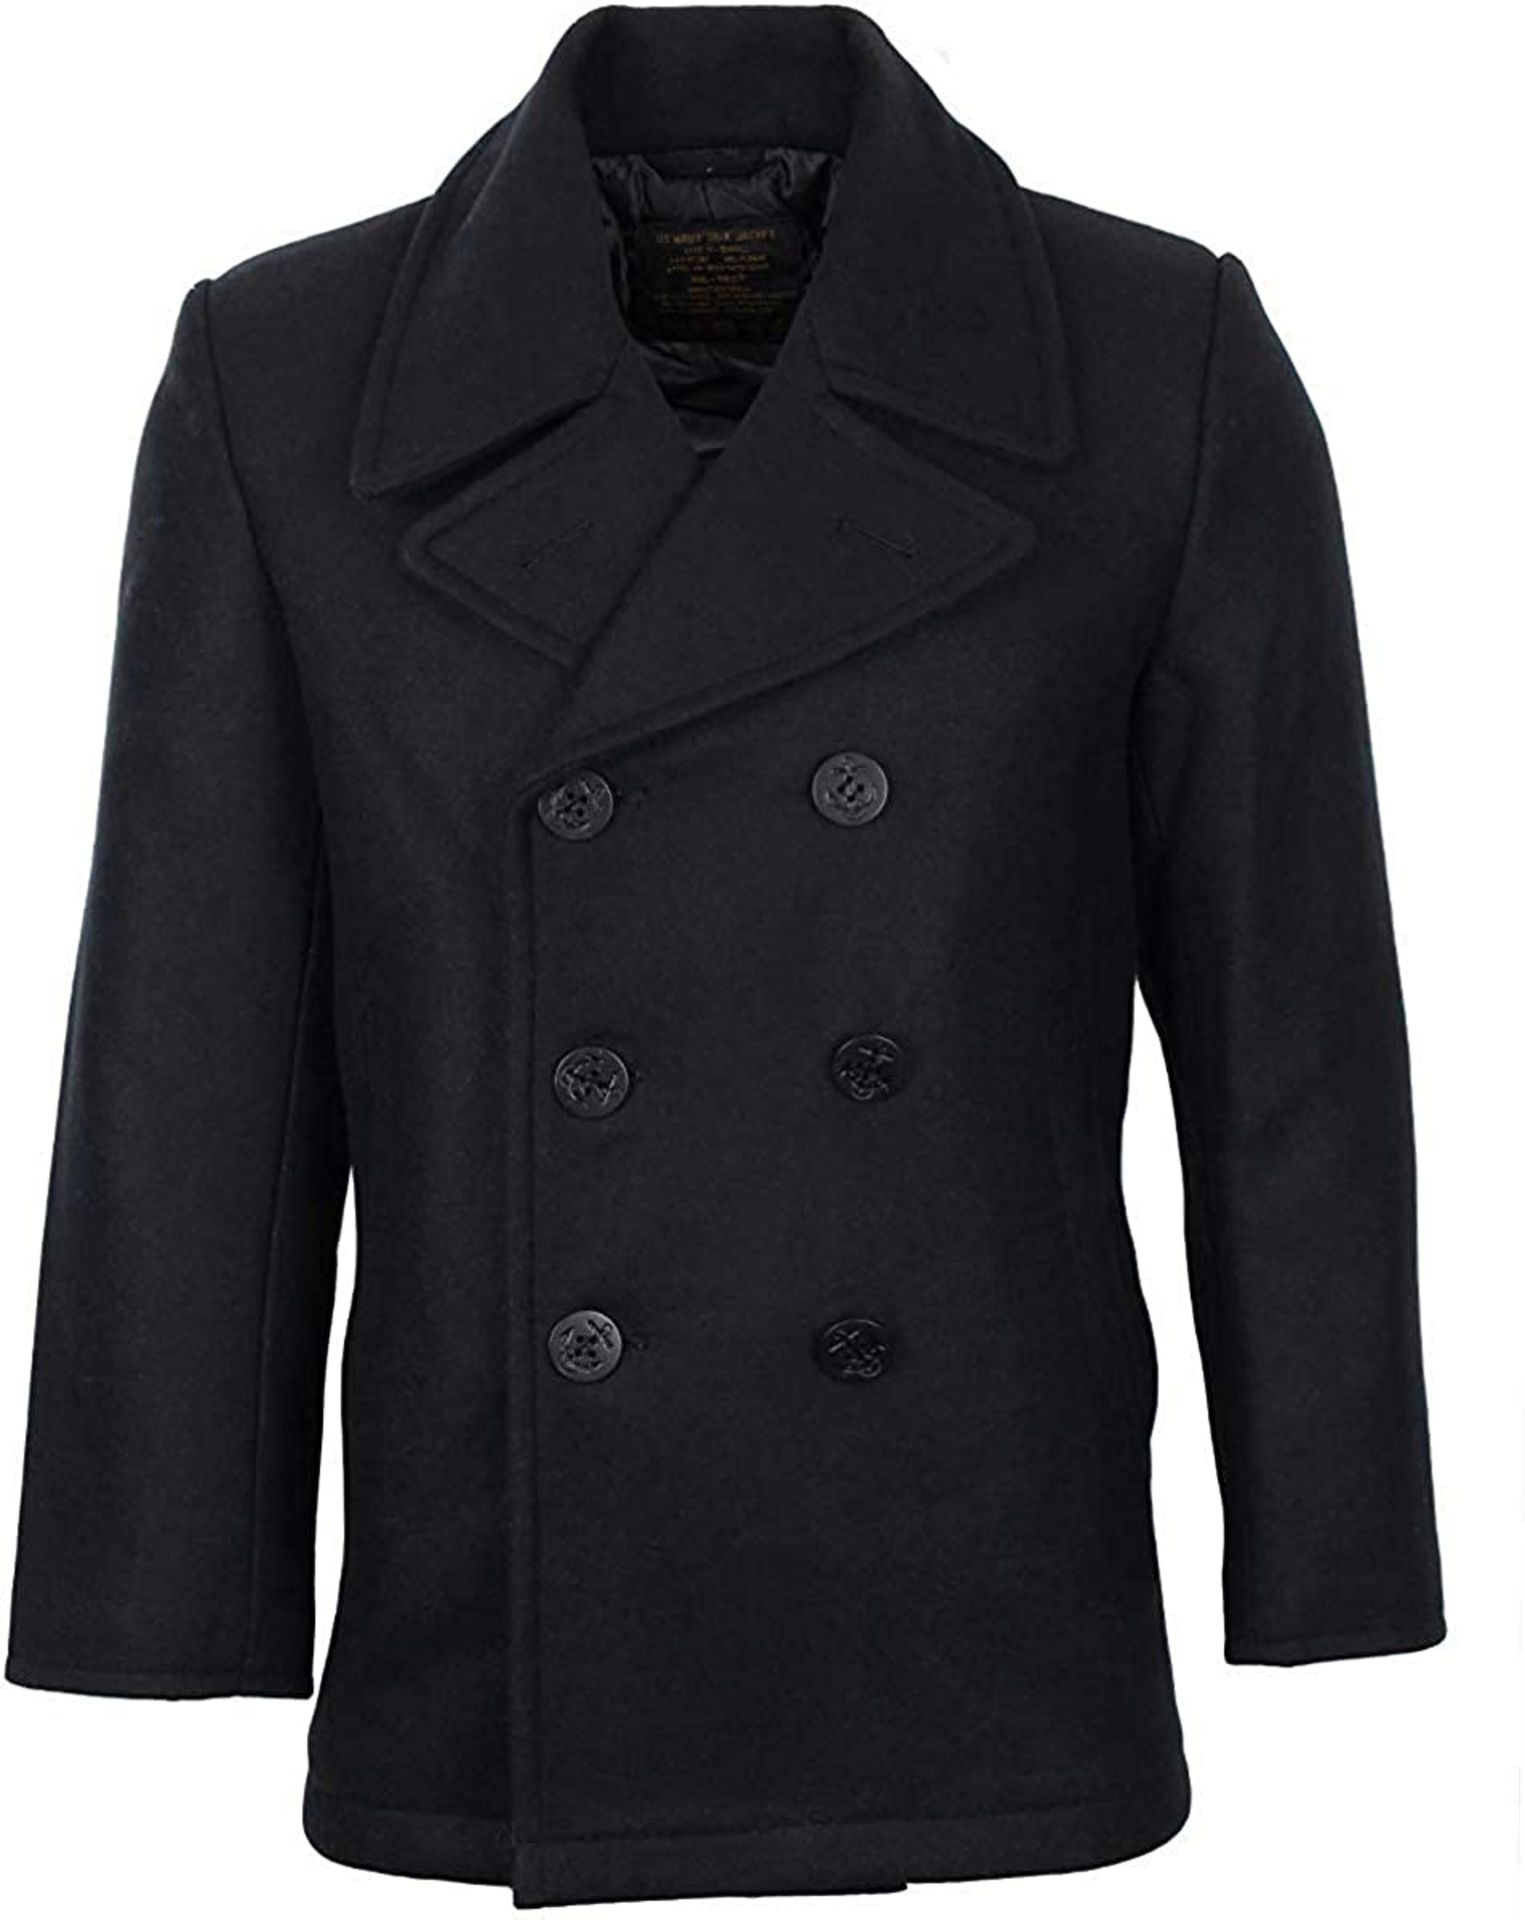 Mil-Tec Men's US Navy Pea Coat Black, X-Large RRP £79.99